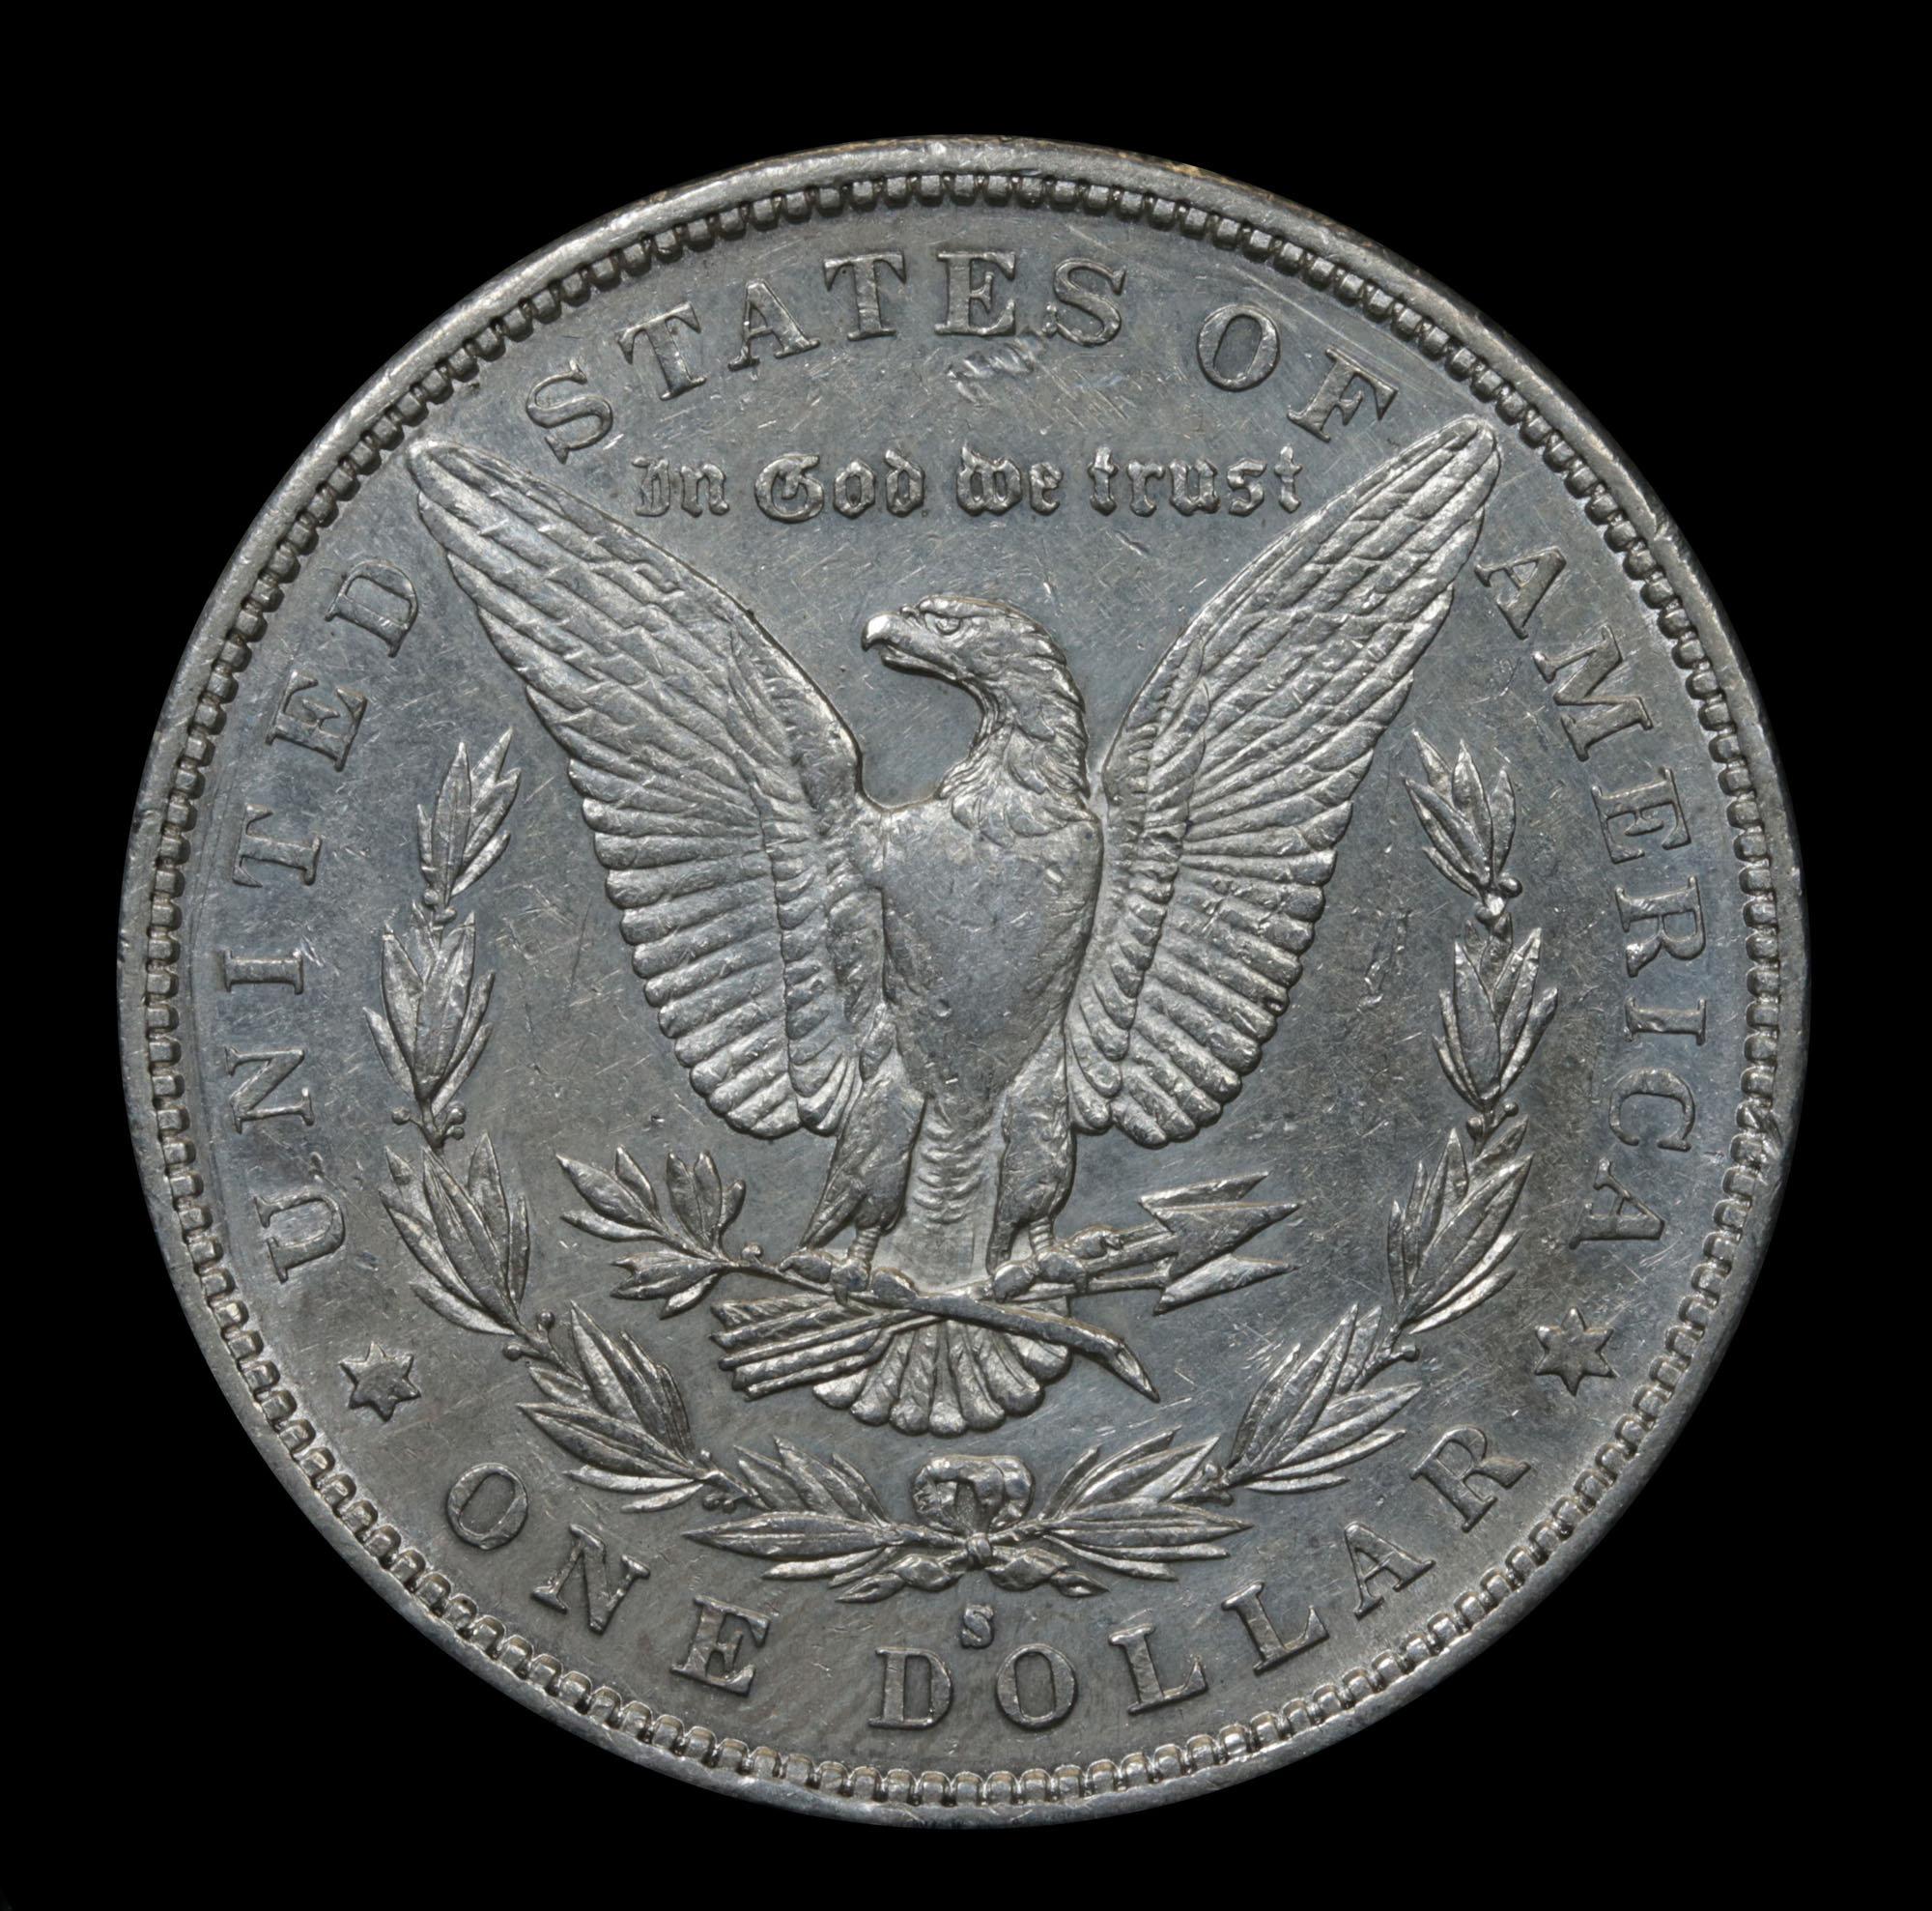 ***Auction Highlight*** Key date 1884-s Morgan Dollar $1 Graded Choice AU by USCG (fc)